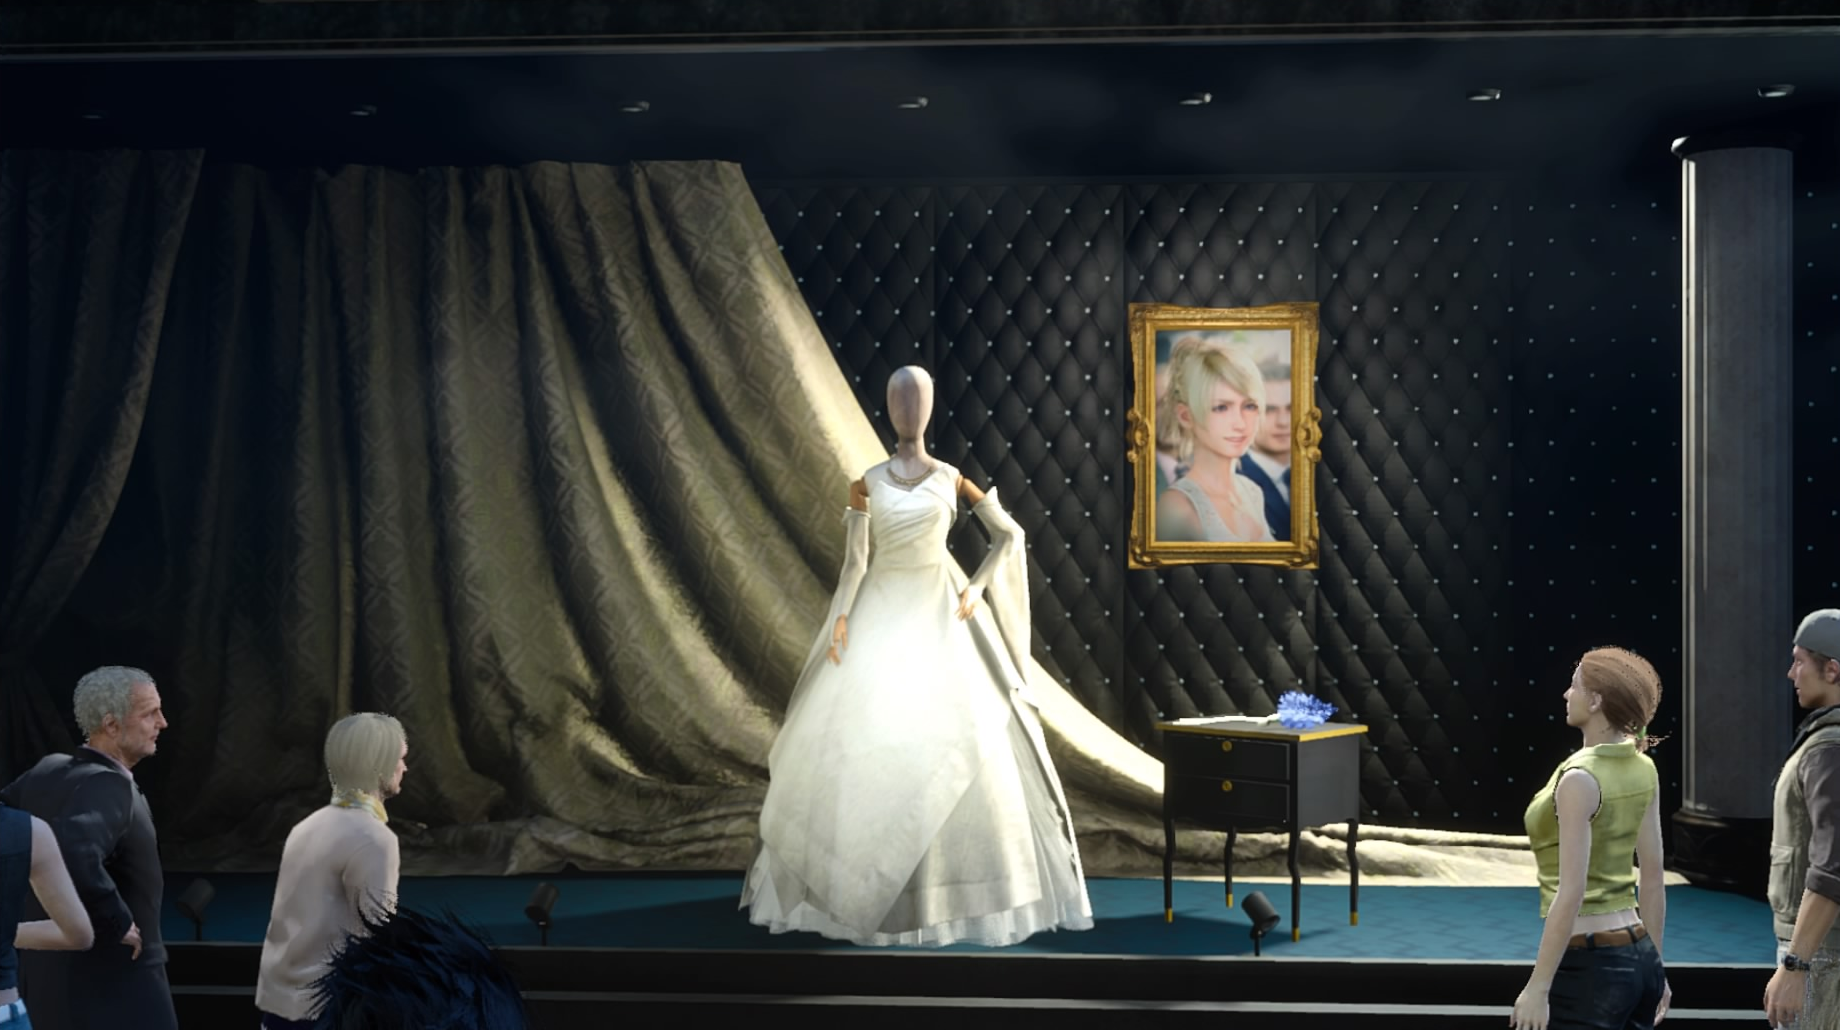 Louis Vuitton and Prada's Final Fantasy collabs to 'Super Moschino